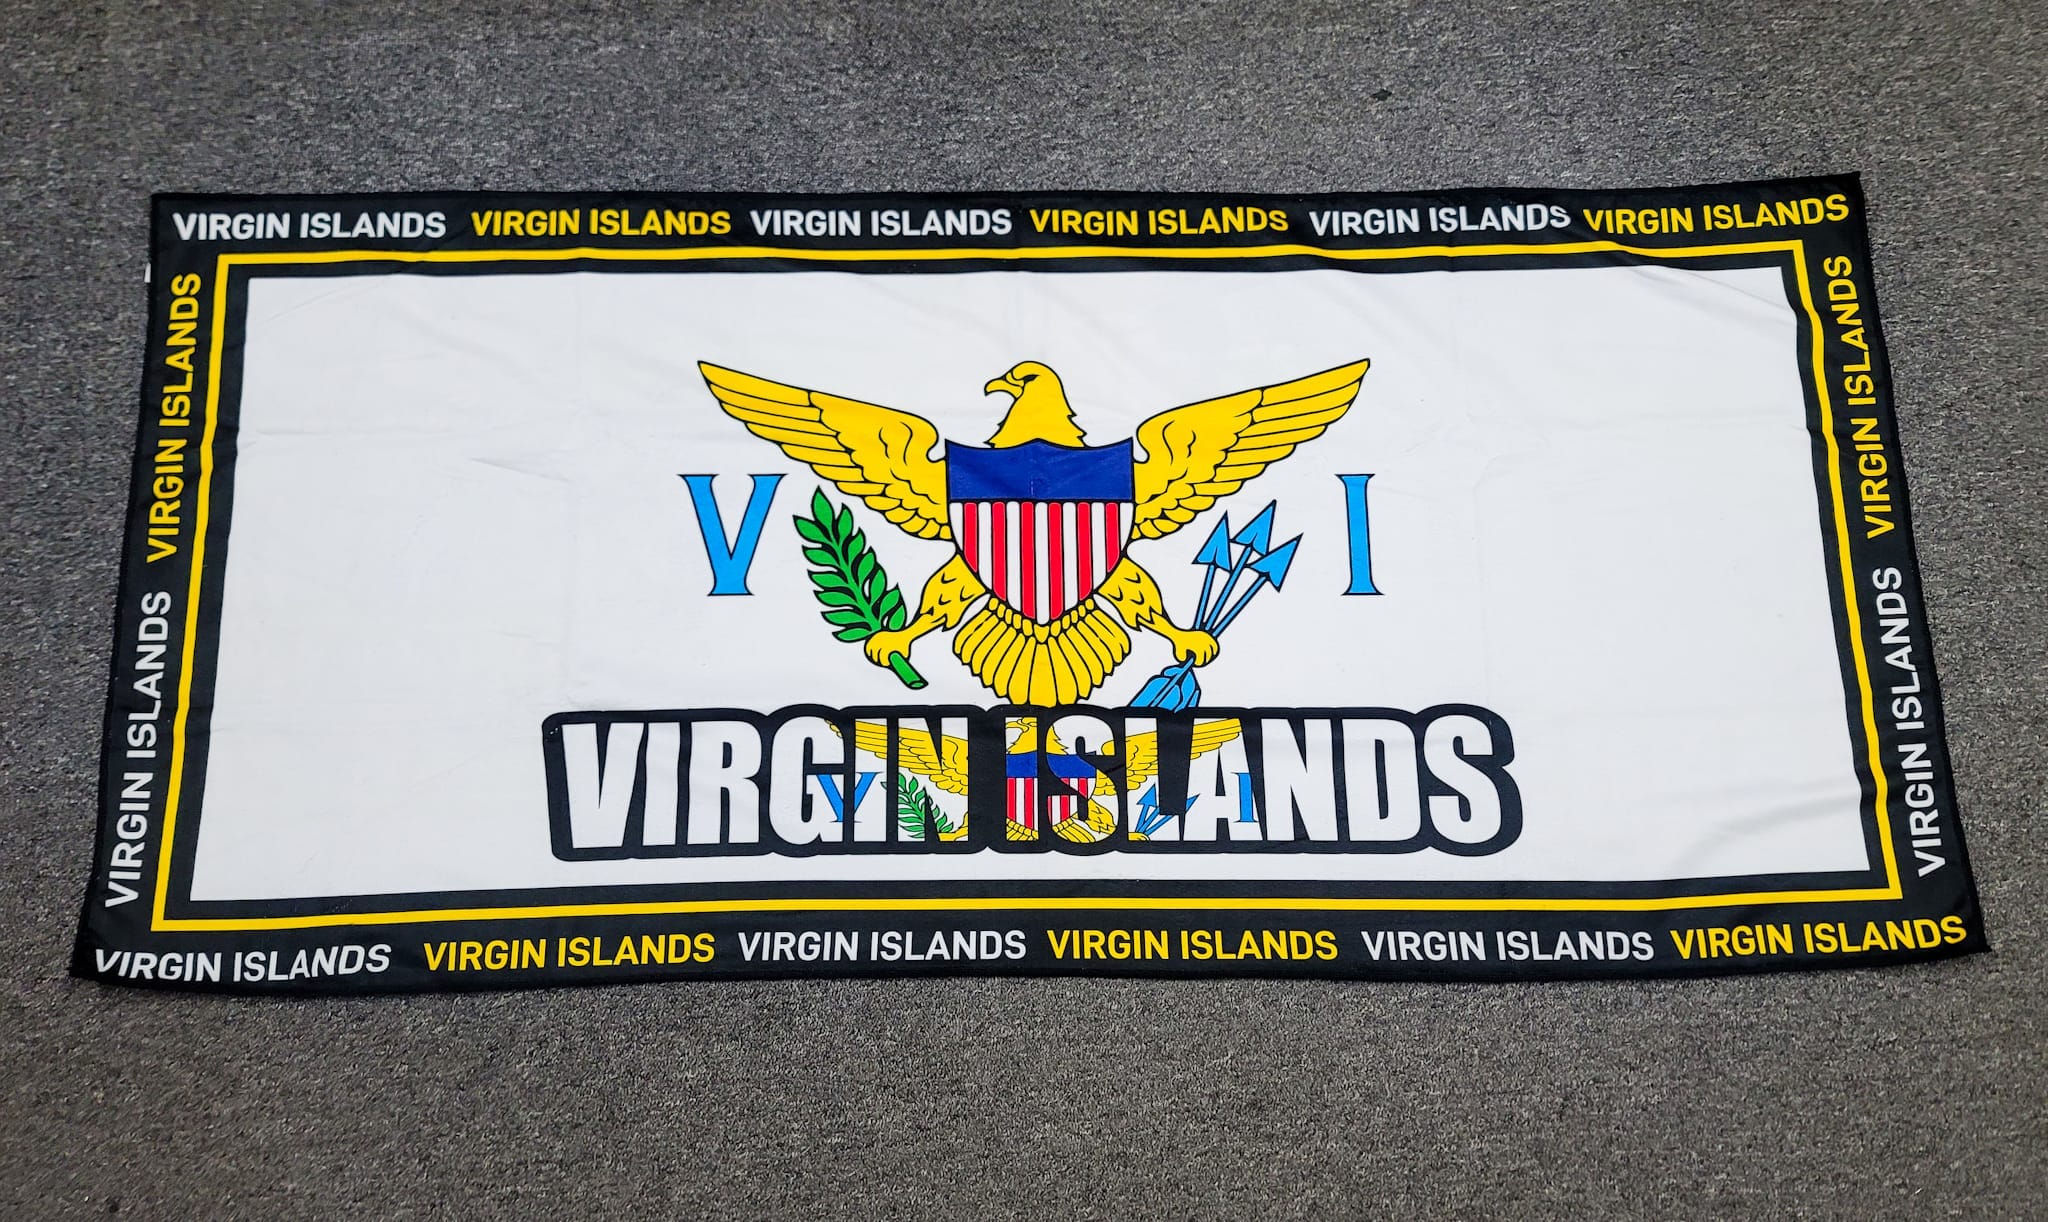 Large VIRGIN ISLANDS Beach Towel - Fete - J'ouvert - Carnival - Beach - Pool - Cruise